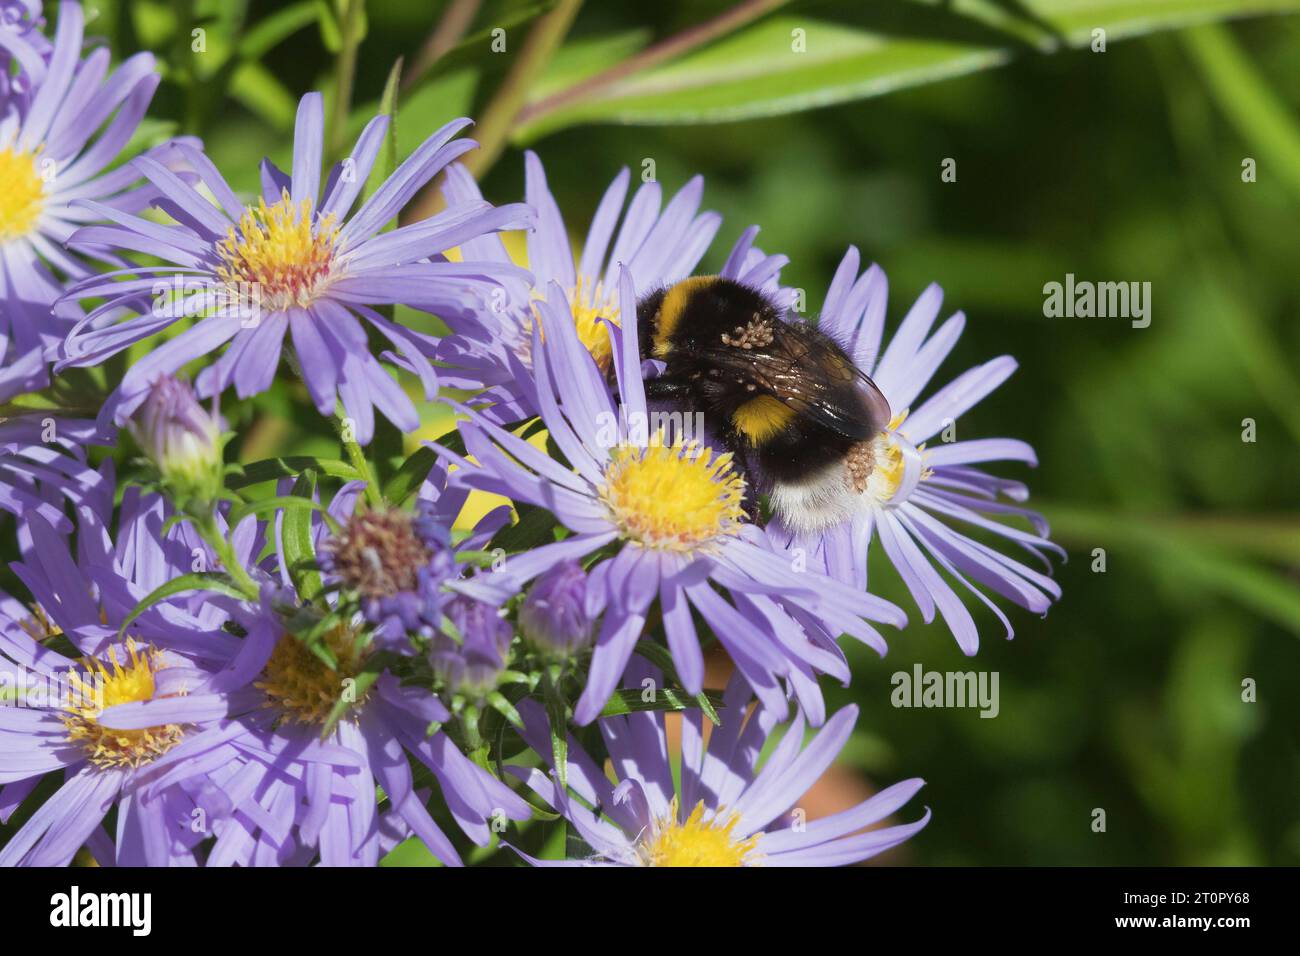 Phoretic Mites (Parasitellus Fucorum) Clinging to a White-tailed Bumblebee (Bombus Lucorum) as it Forages on Michaelmas Daisy Flowers Stock Photo